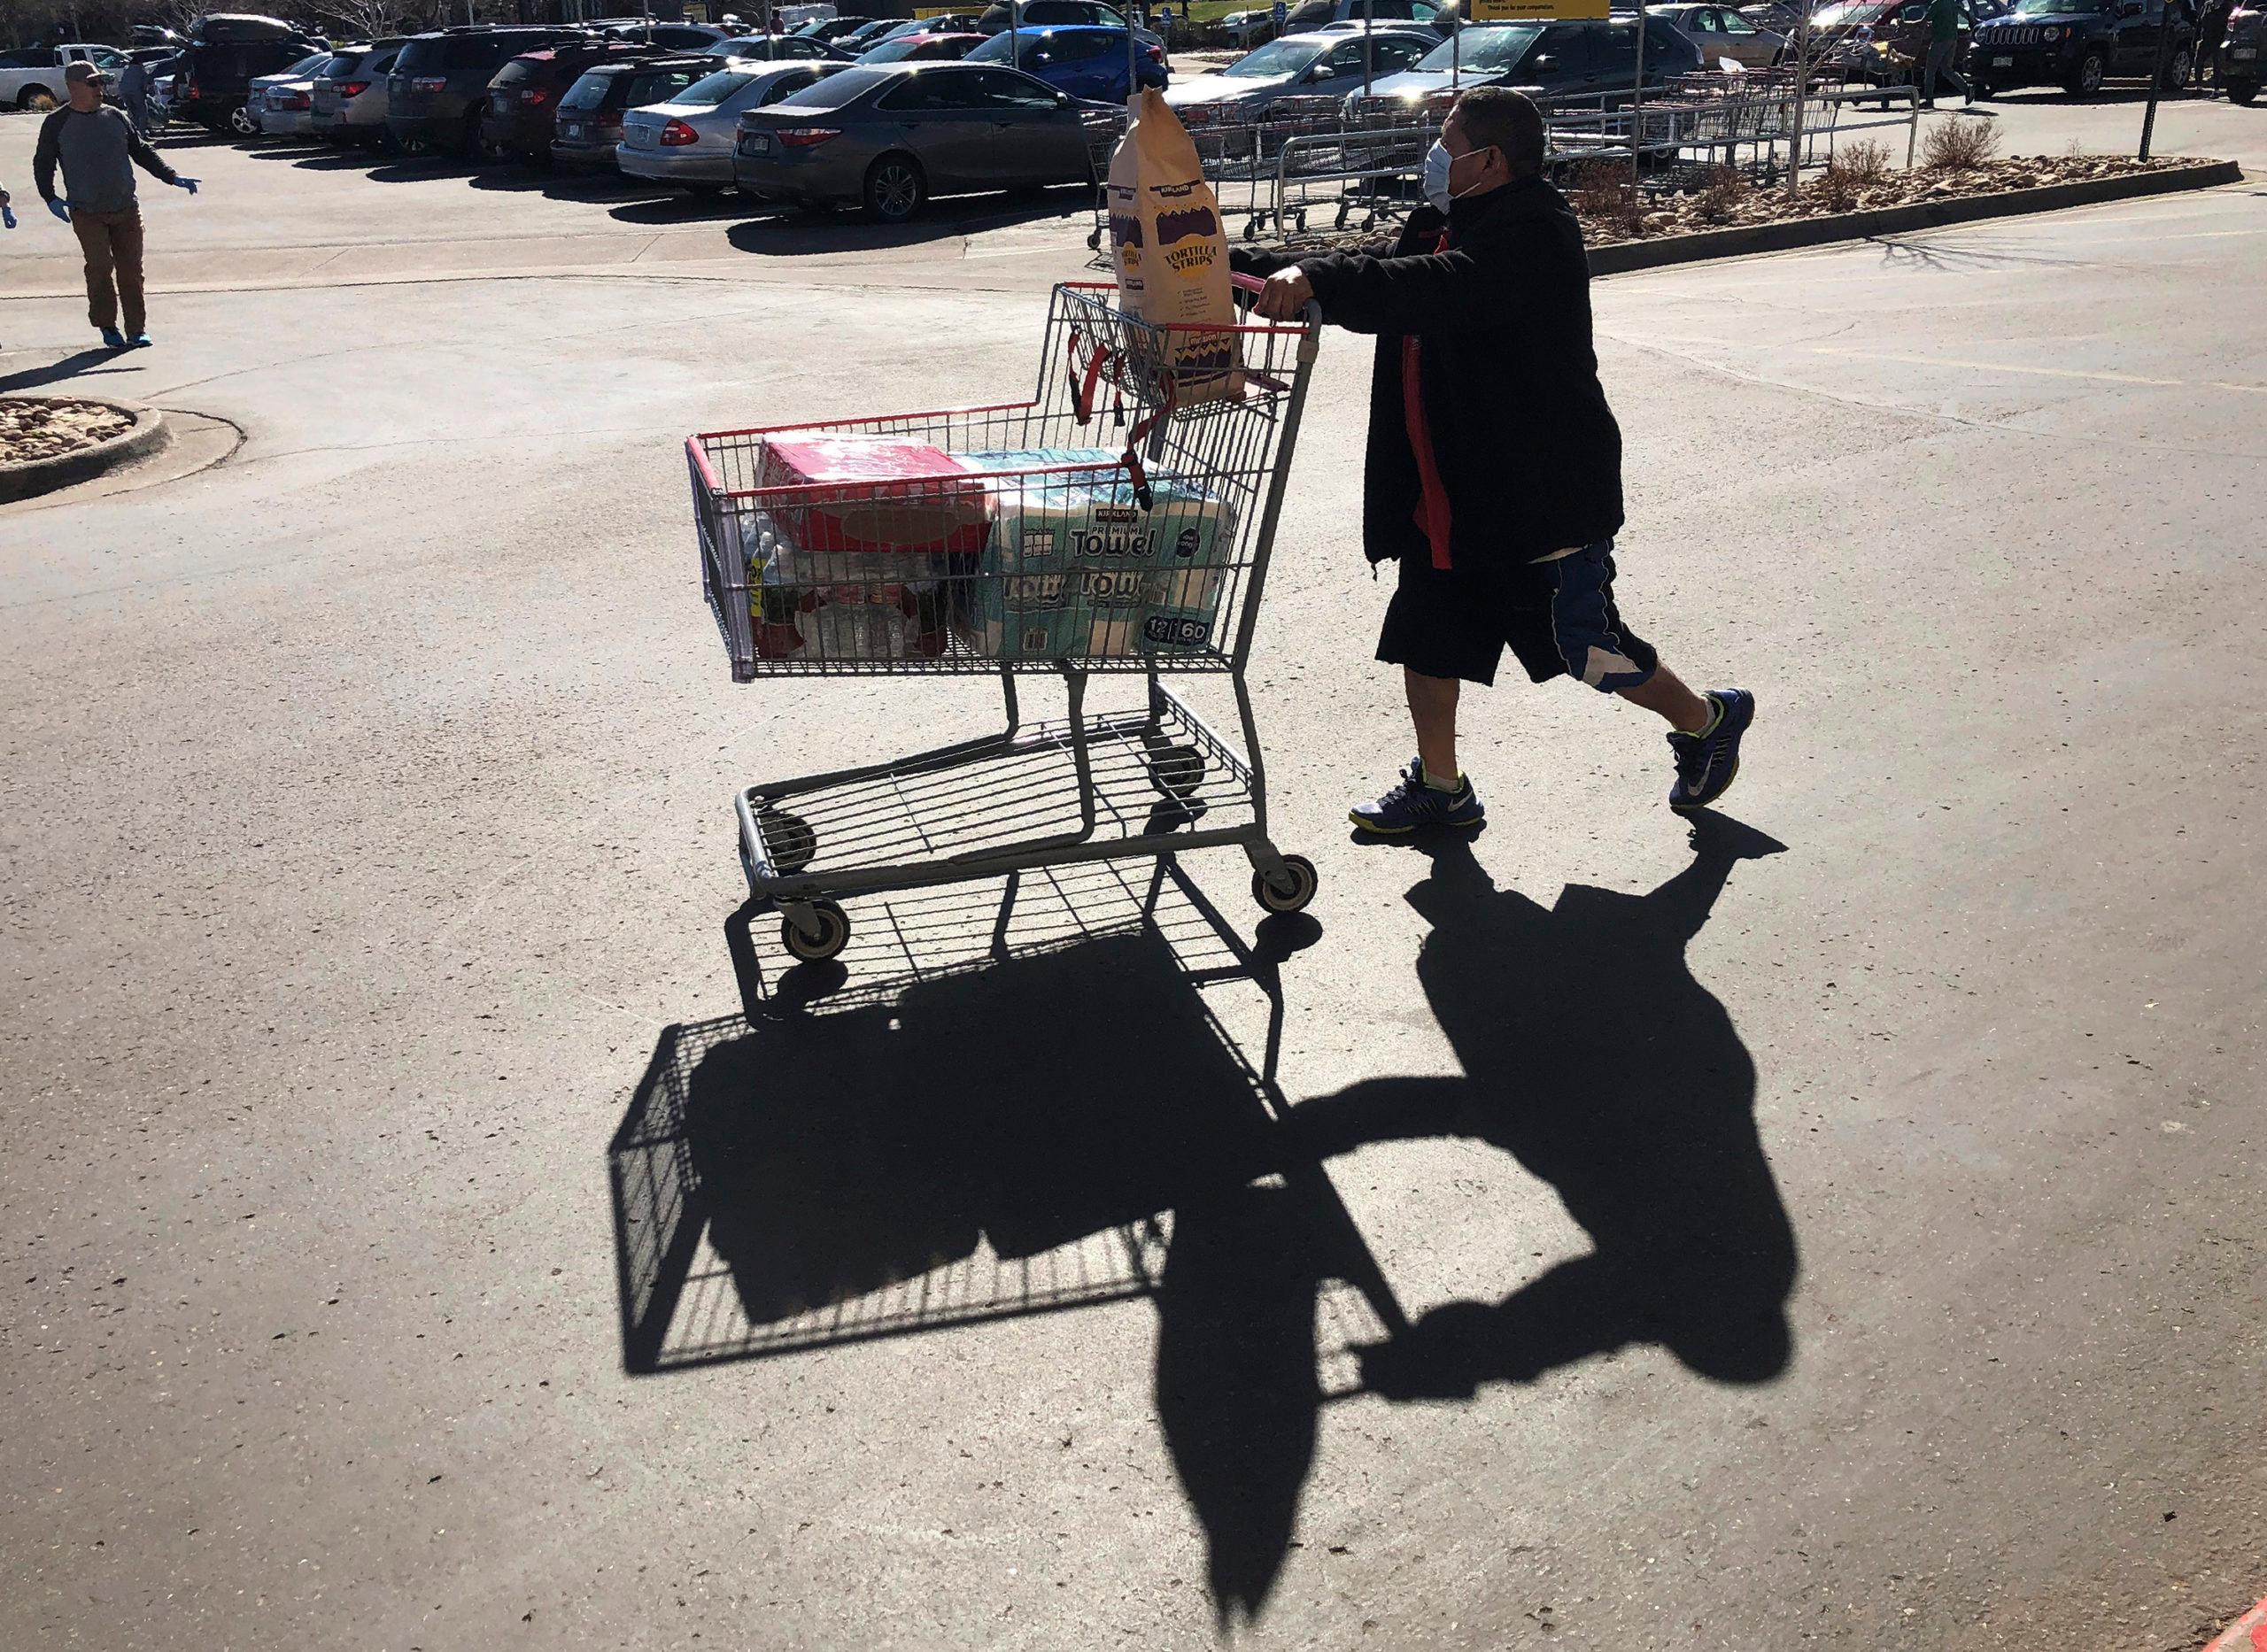 Costco shopper groceries during coronavirus pandemic